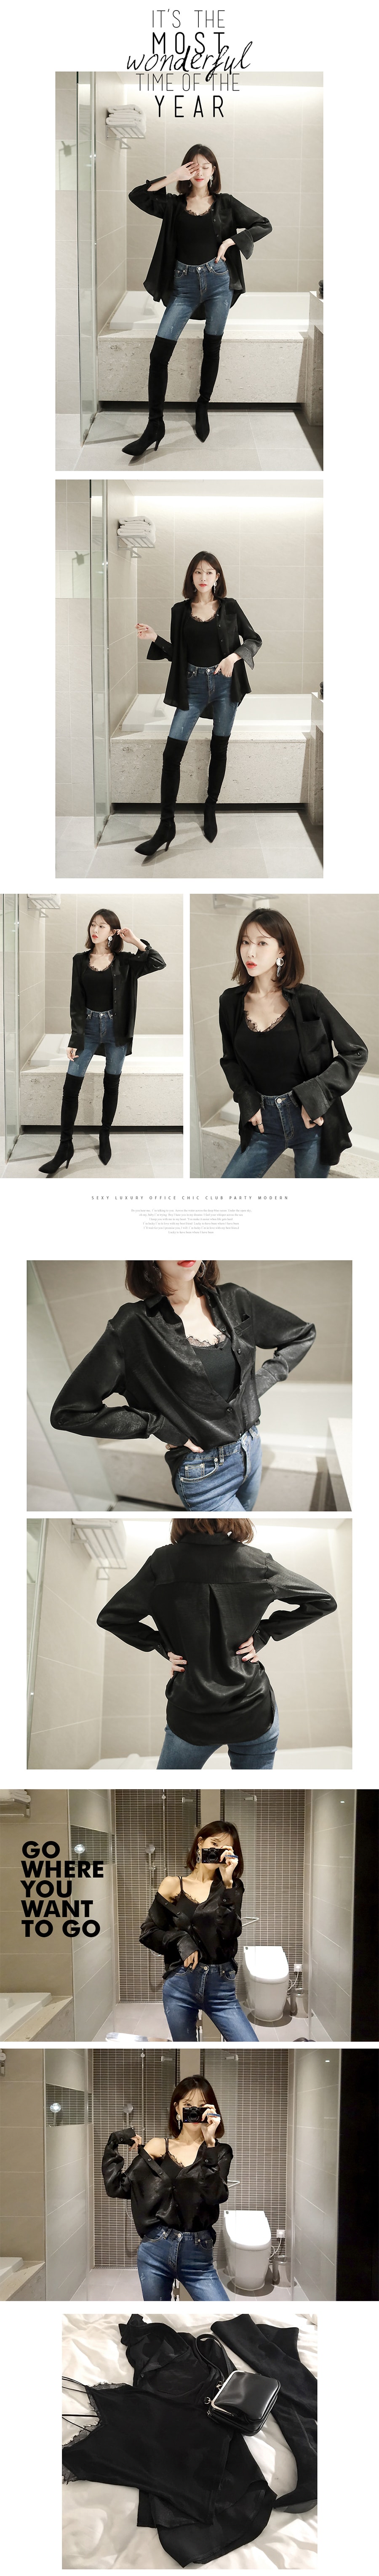 KOREA Shining Button Blouse Shirts Black One Size(Free) [Free Shipping]